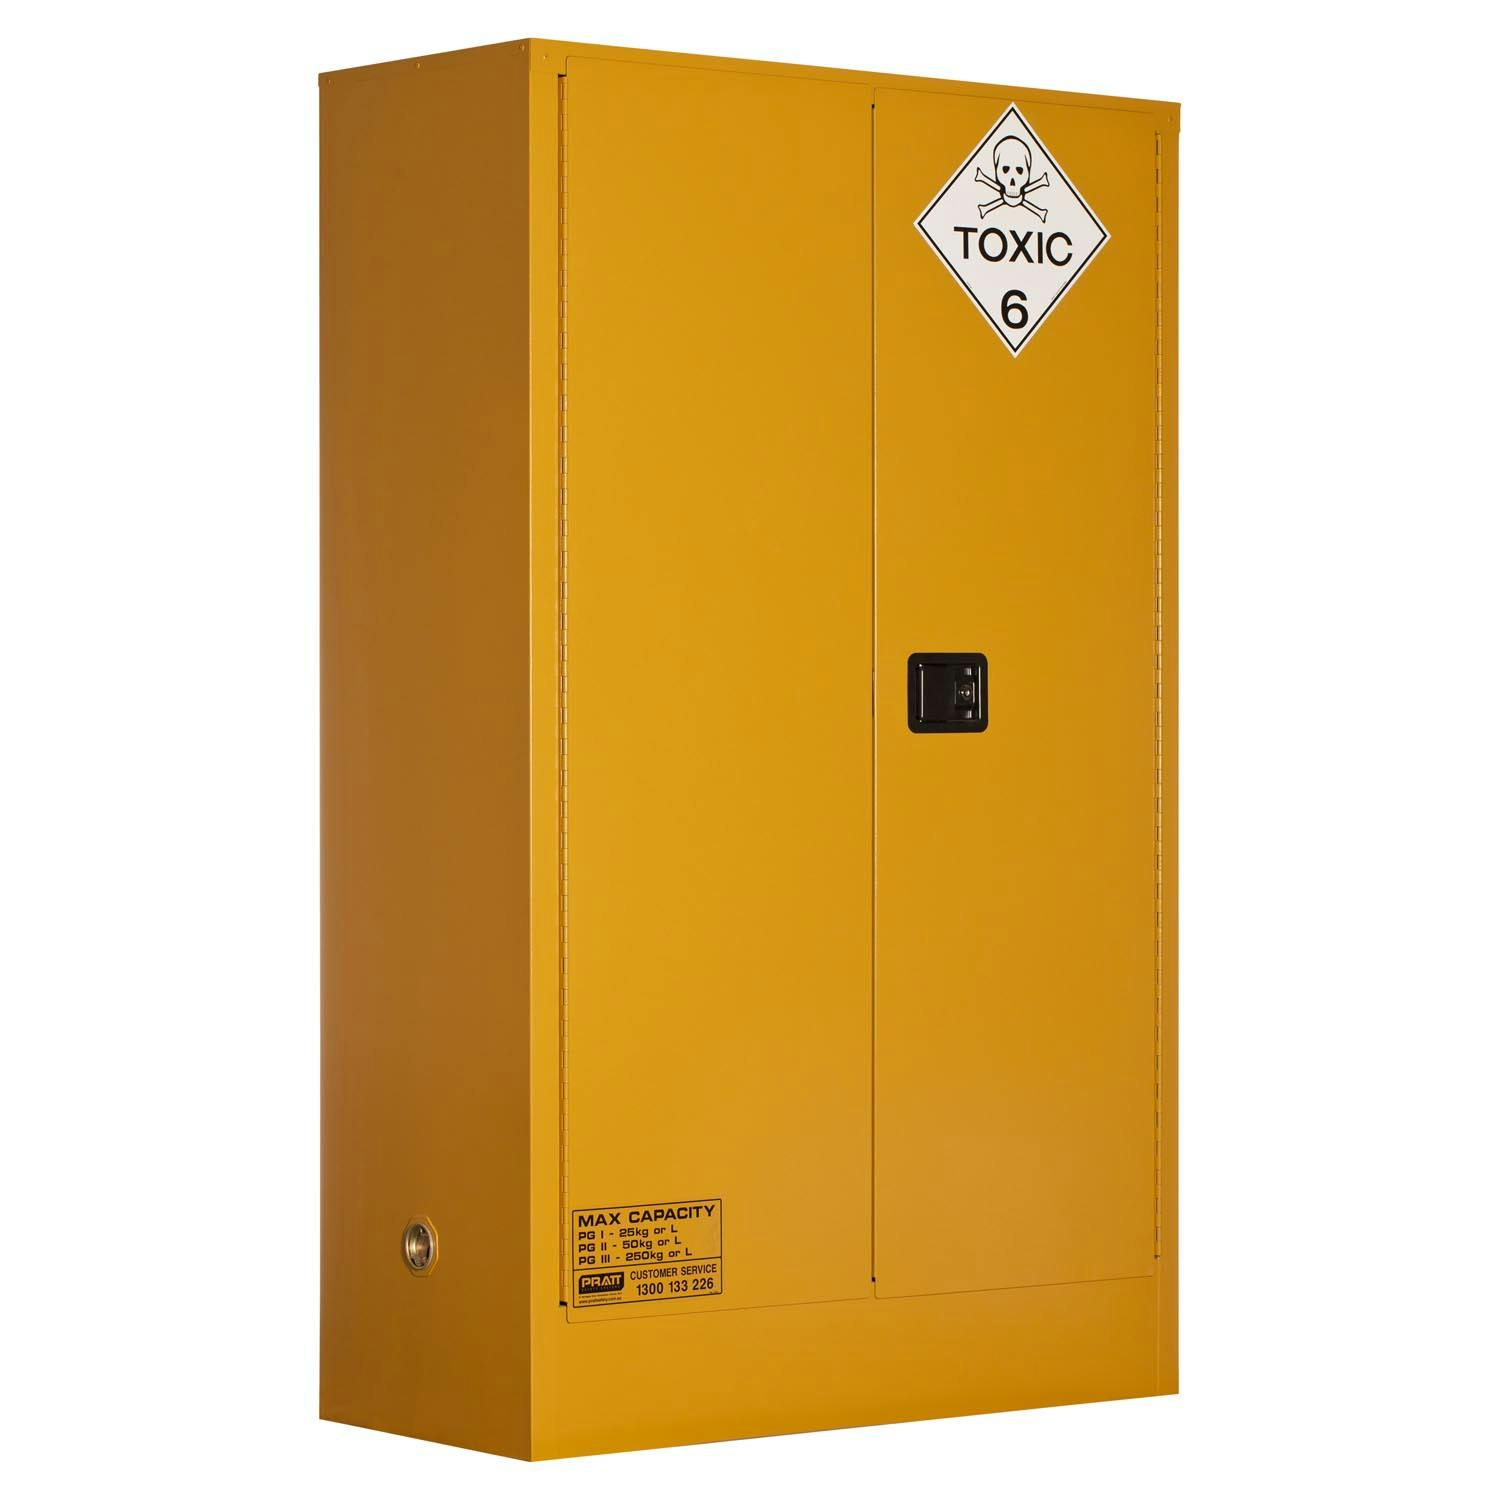 Pratt Toxic Substance Storage Cabinet: 250L - 2 Doors - 3 Shelves